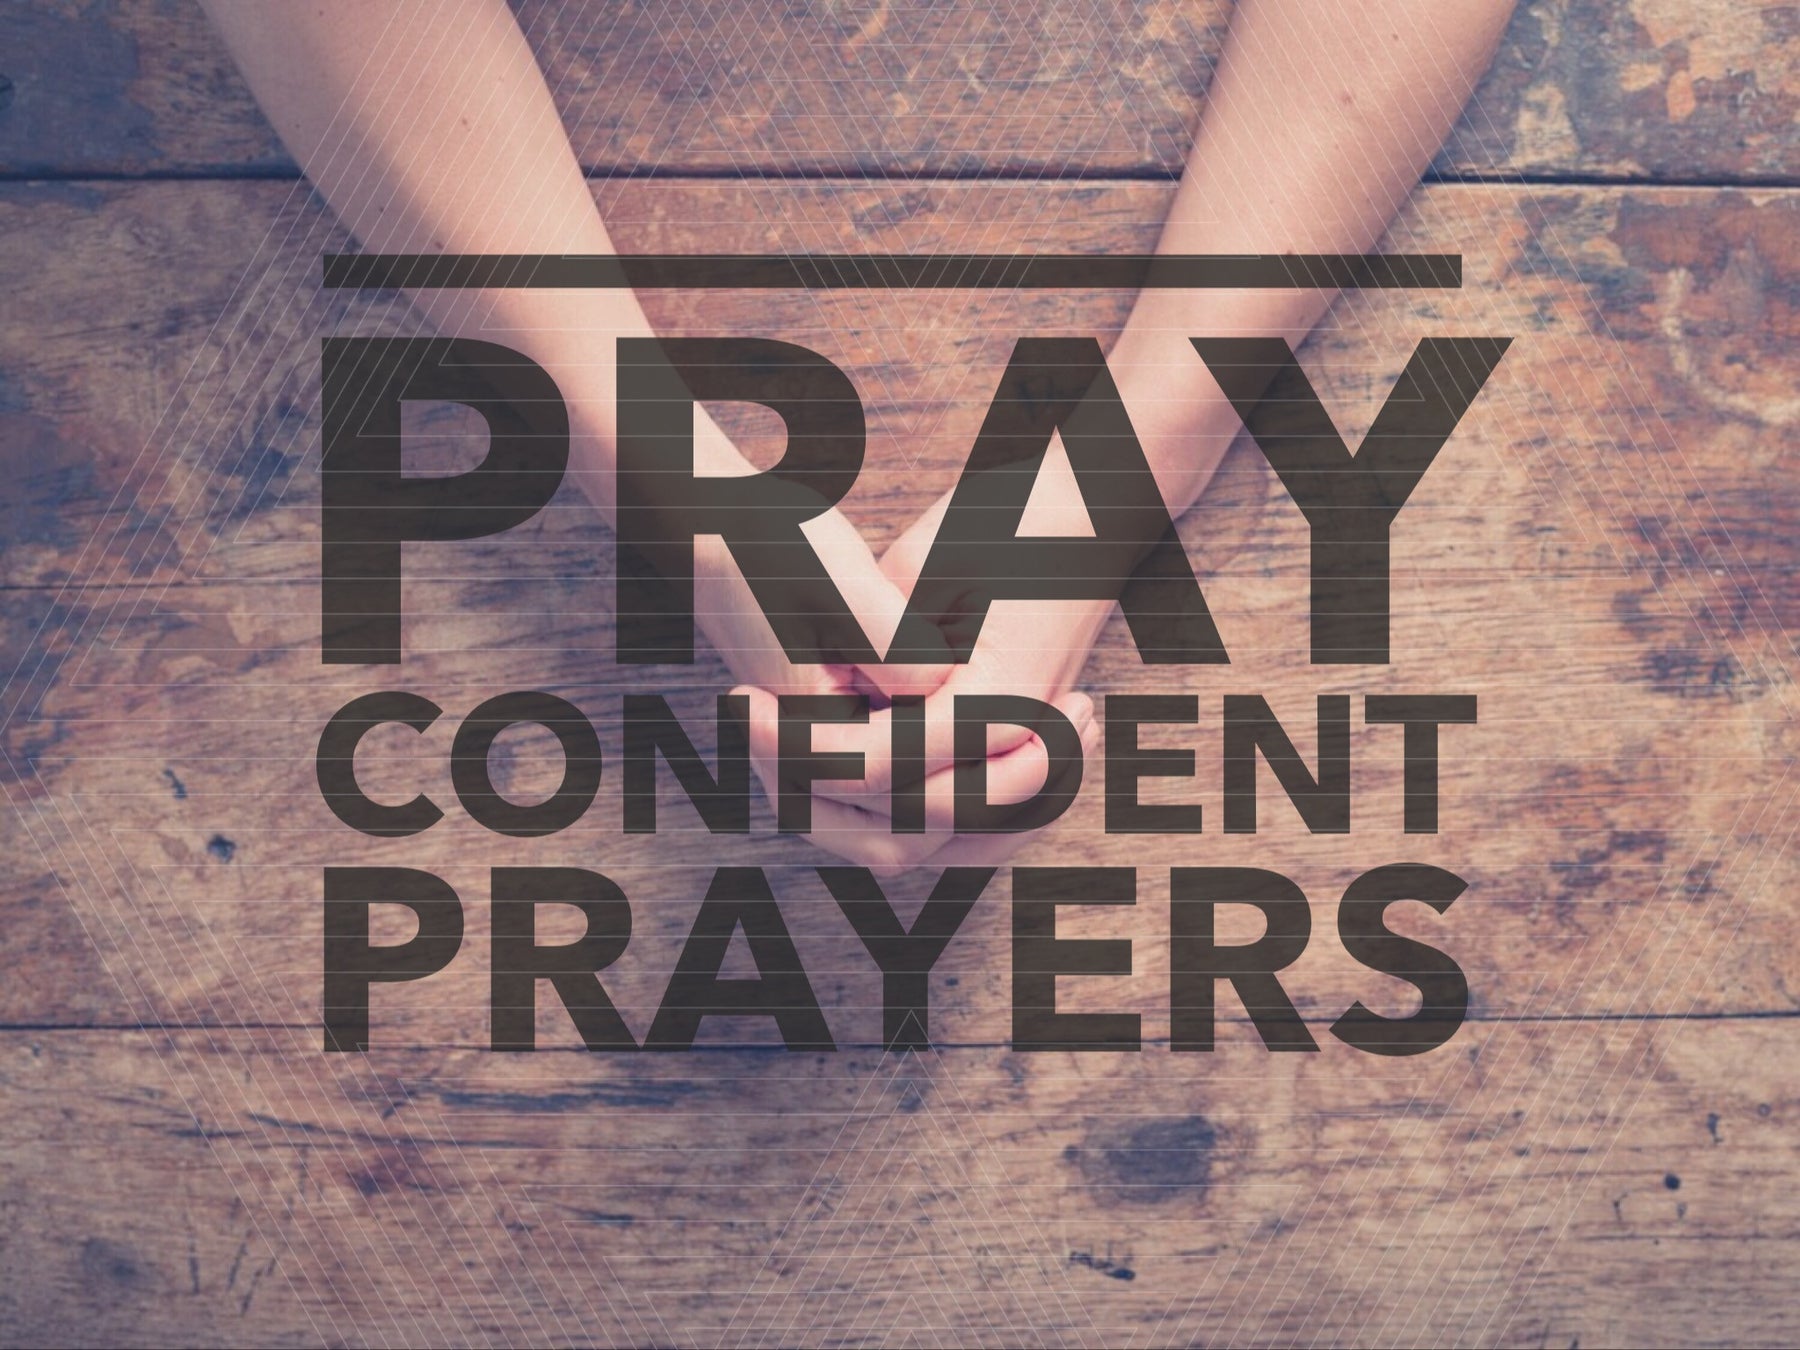 Praying Confident Prayers